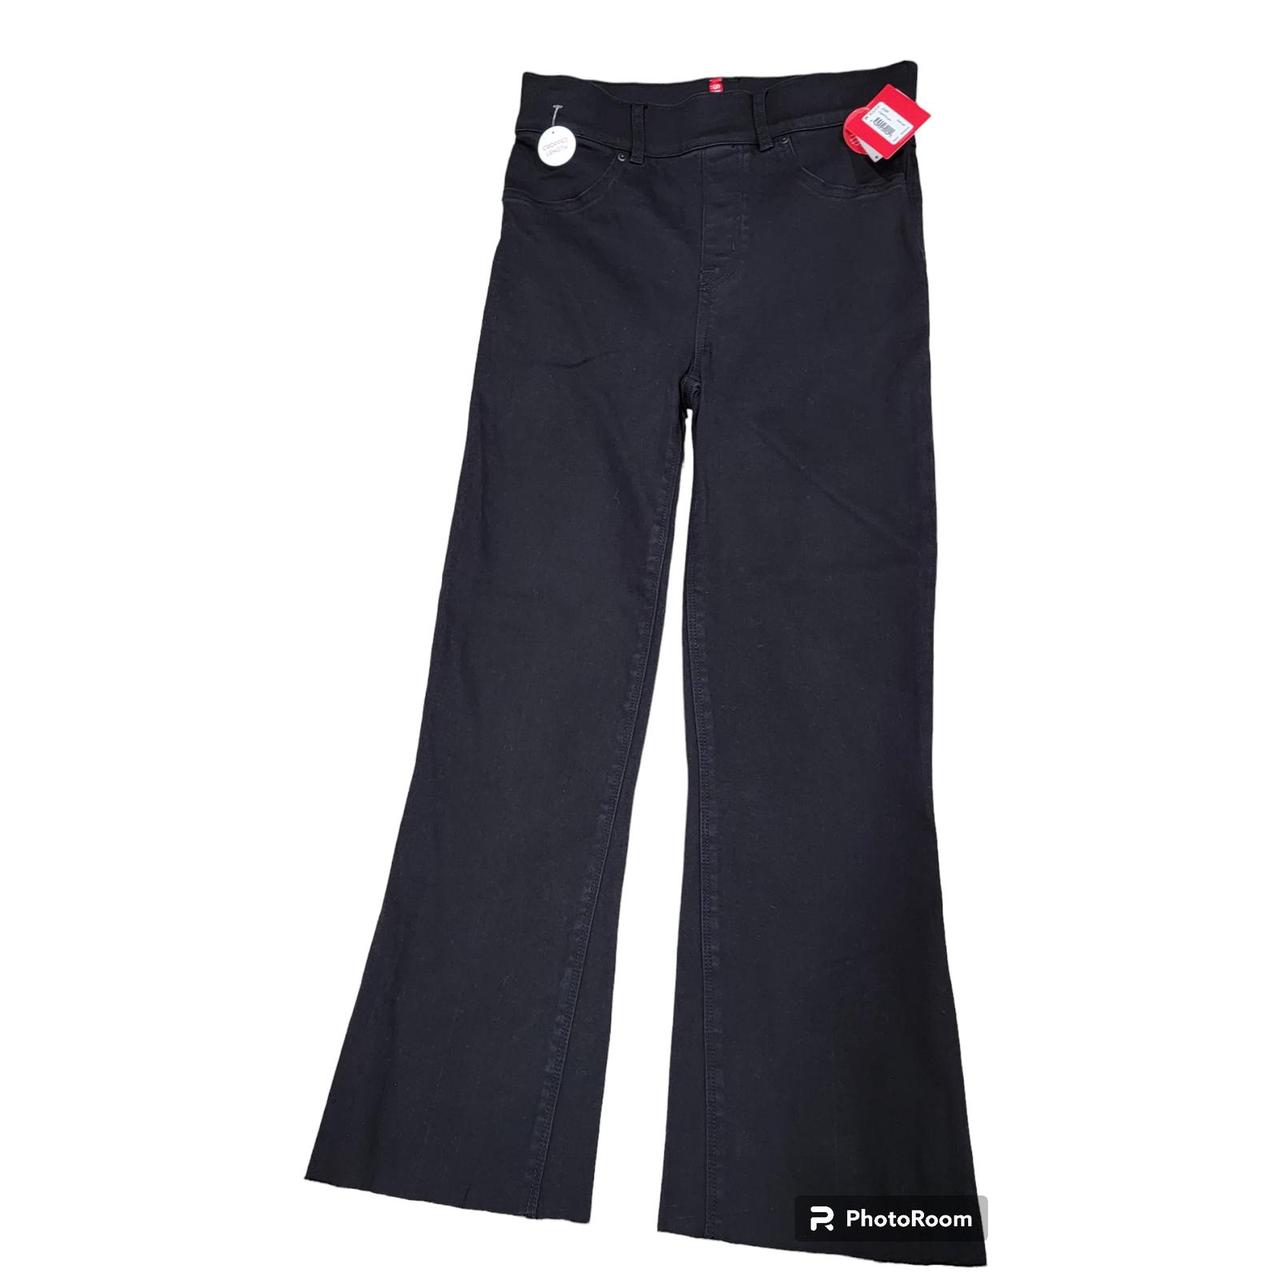 SPANX Women's Flare Denim Jeans Pants Clean Black (XS